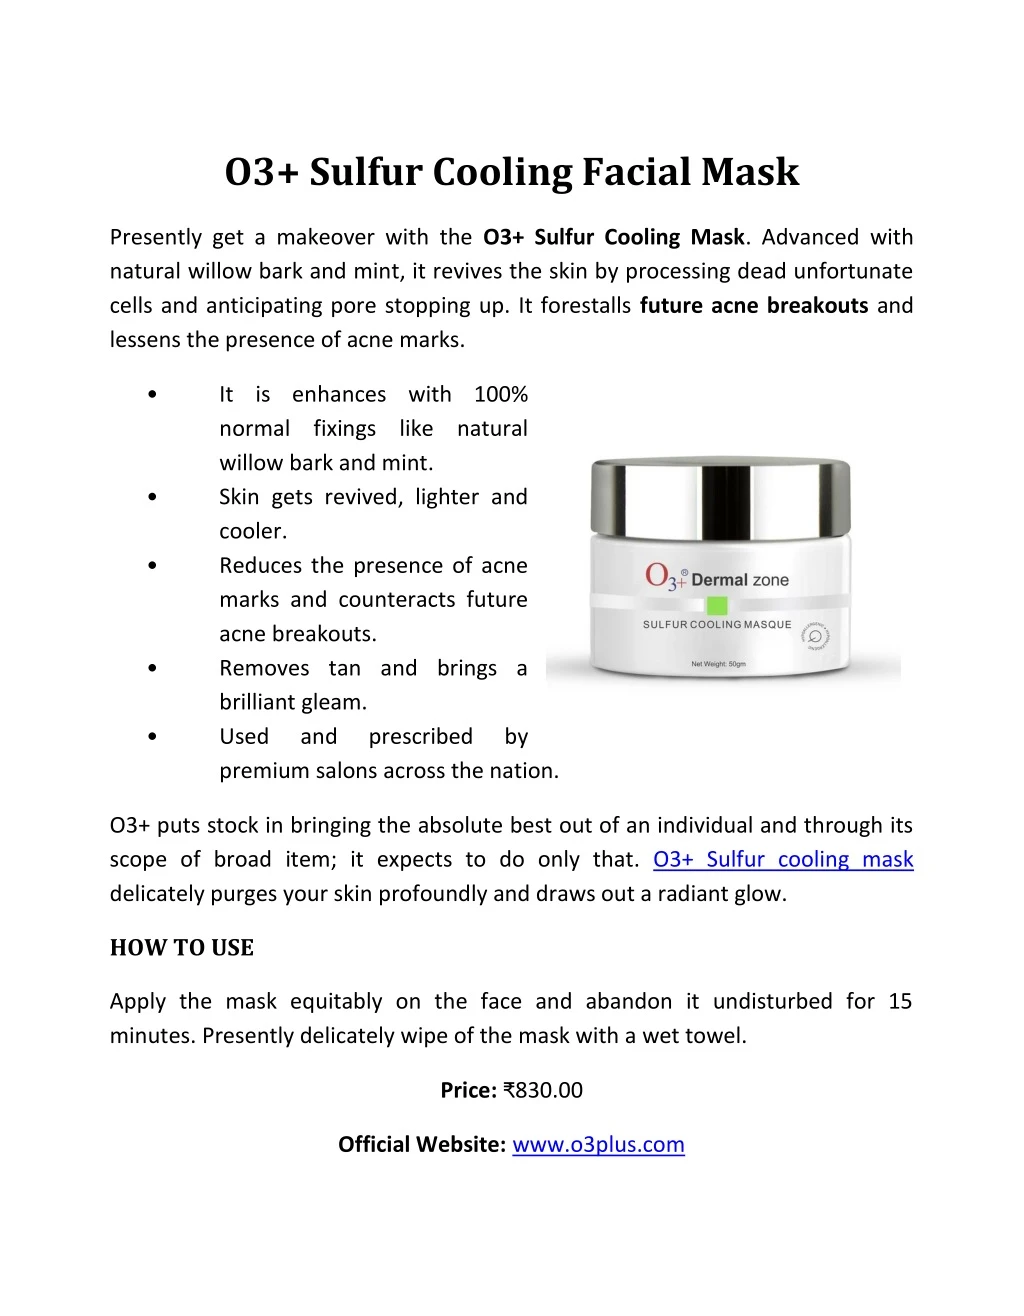 o3 sulfur cooling facial mask